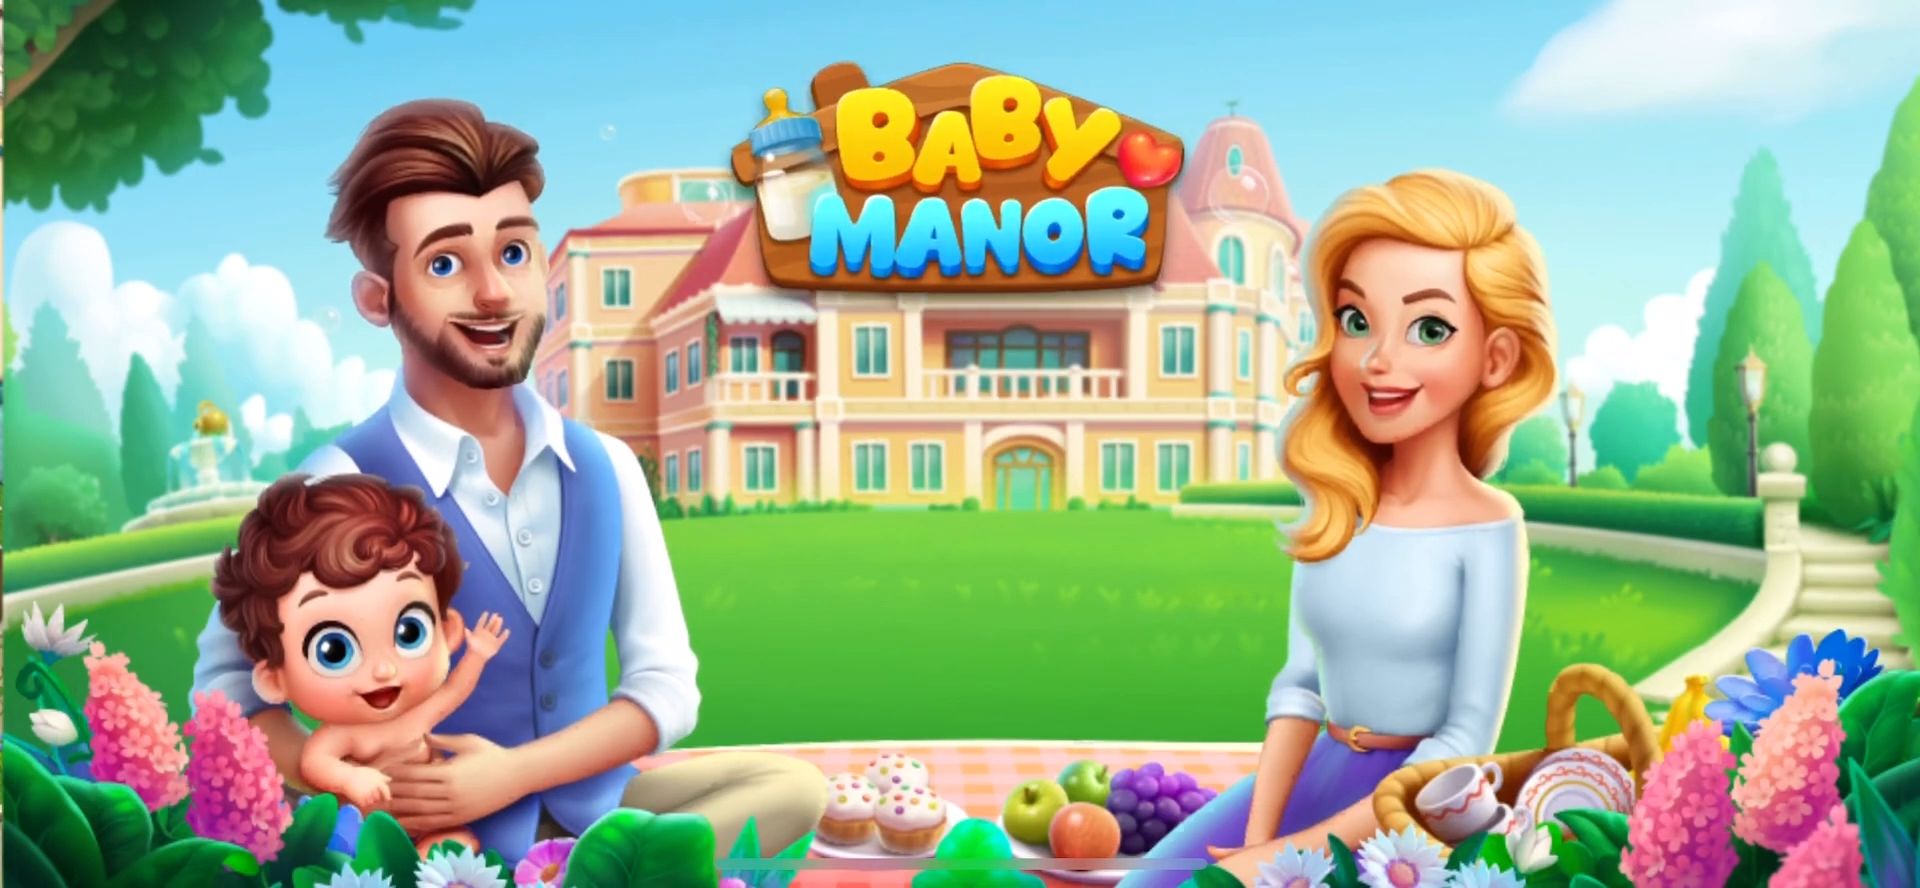 Baby Manor: Baby Raising Simulation & Home Design スクリーンショット1